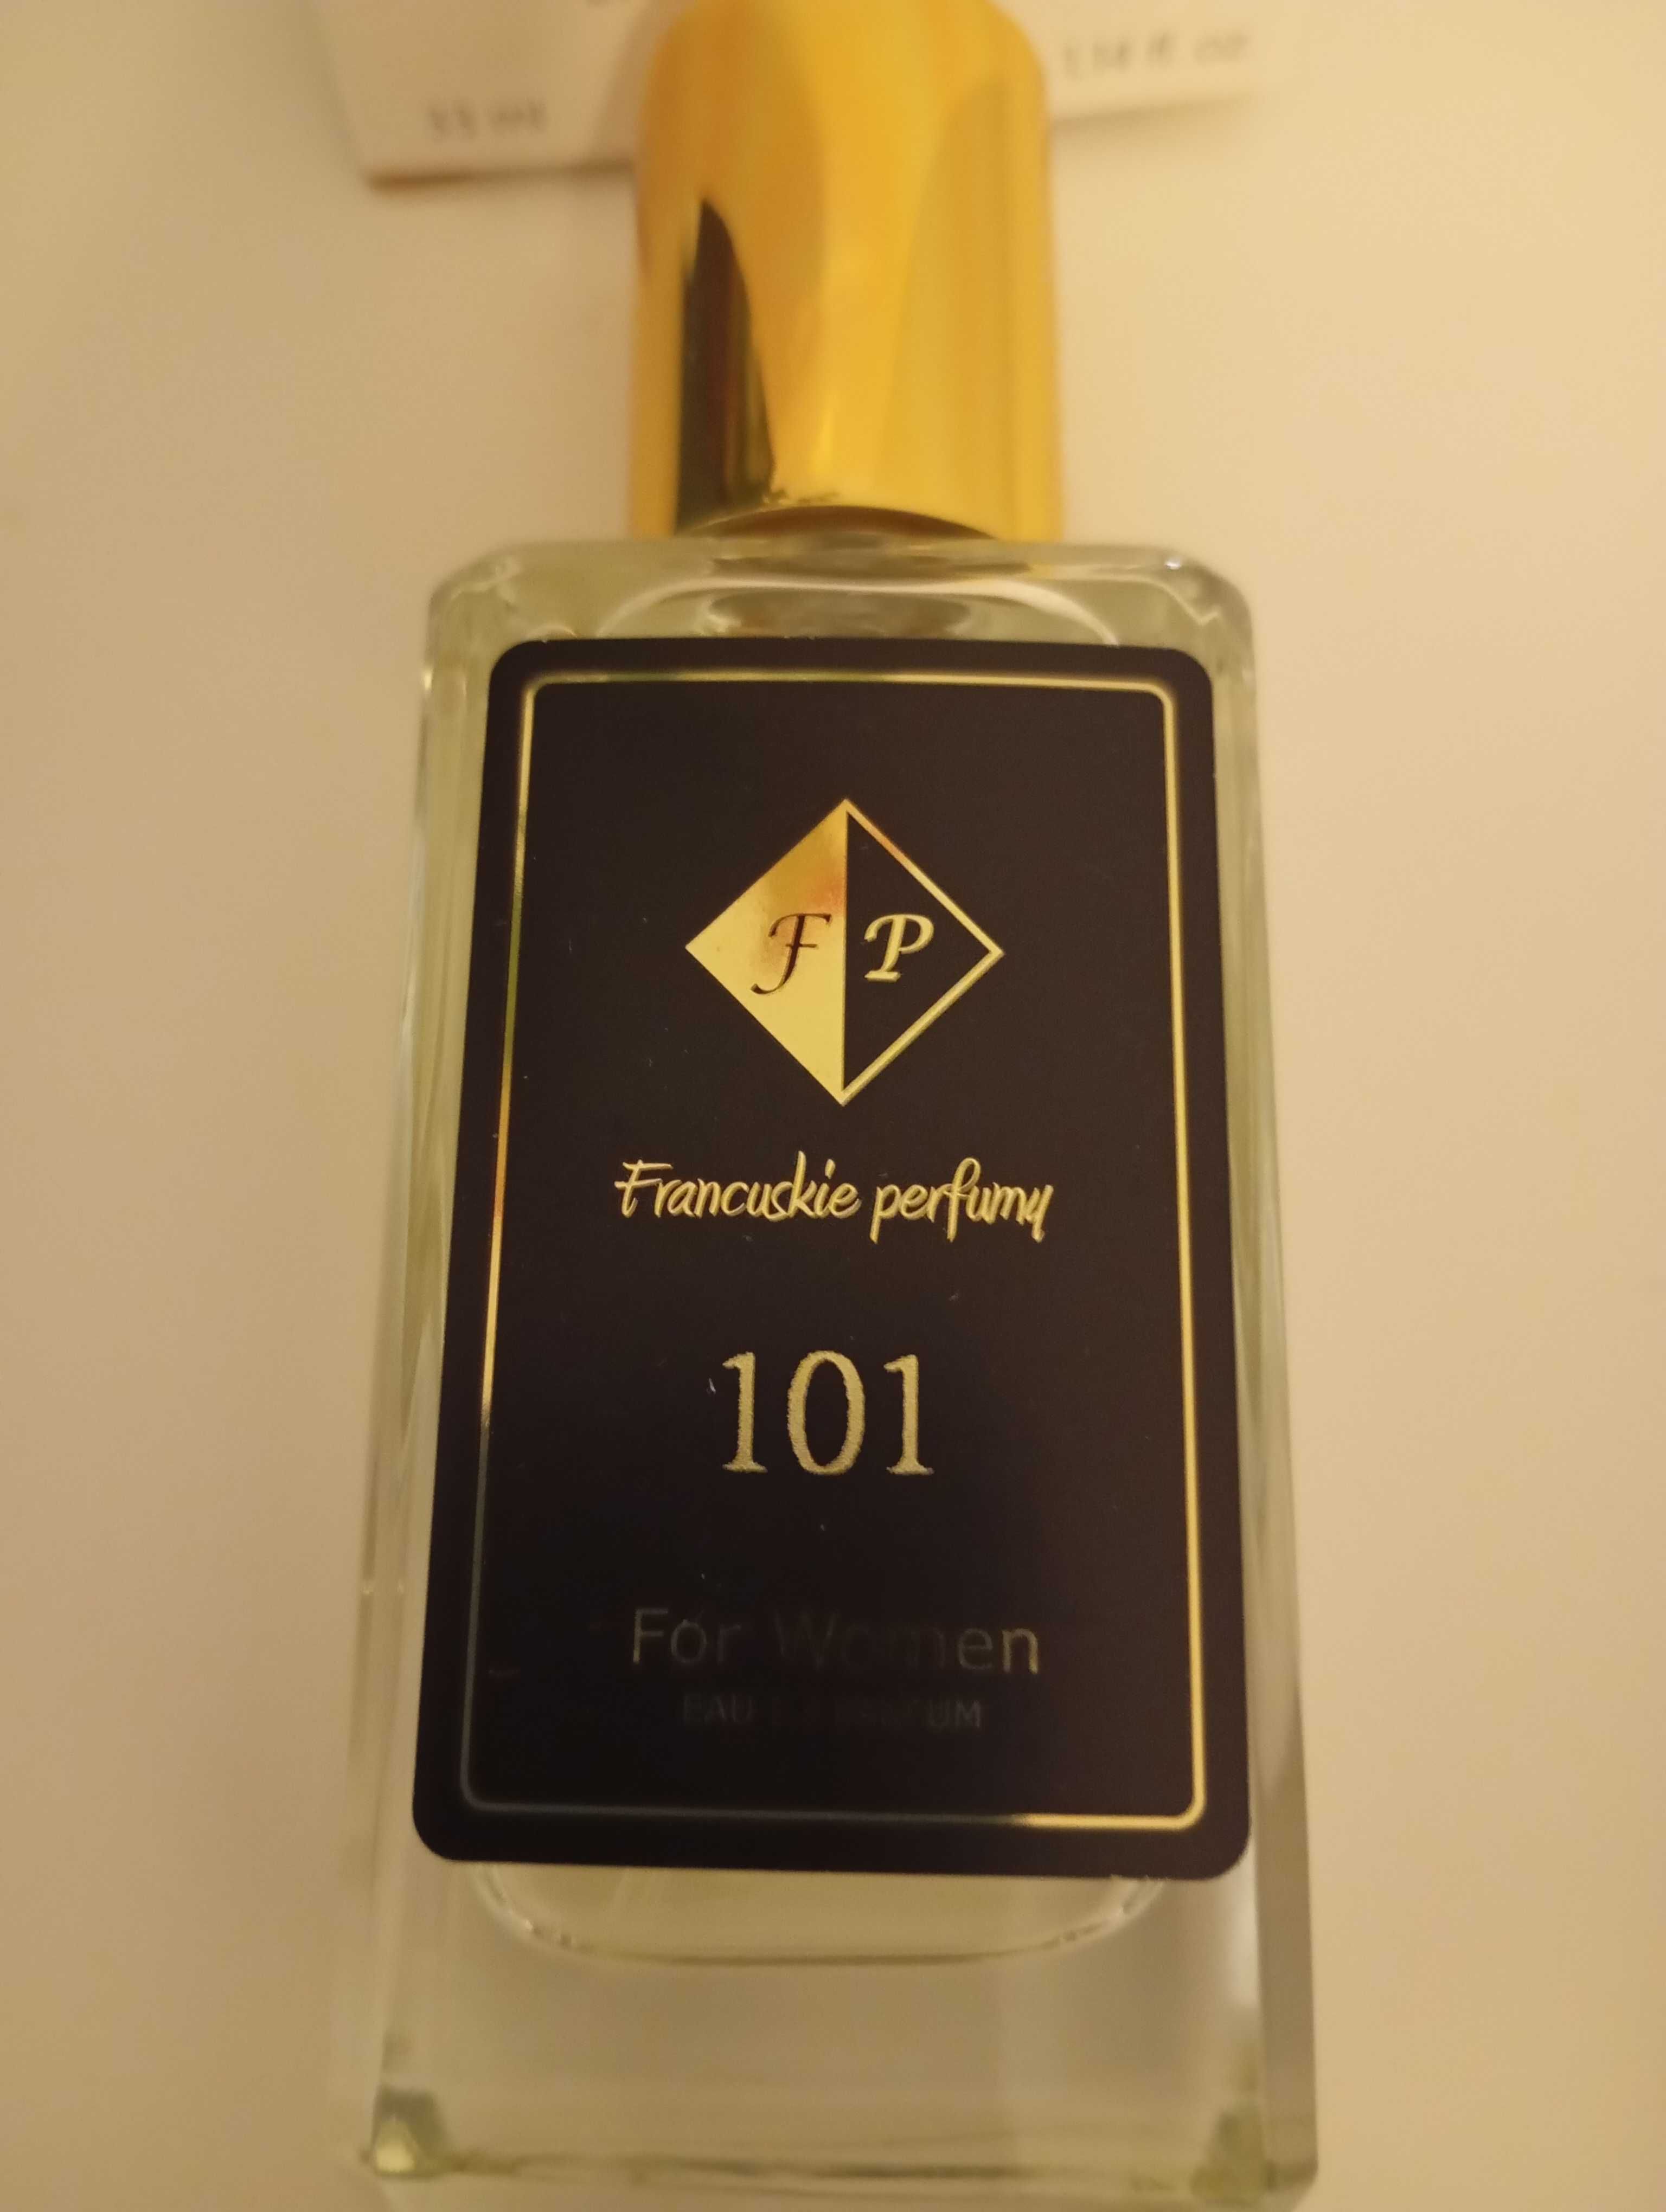 Francuskie perfumy